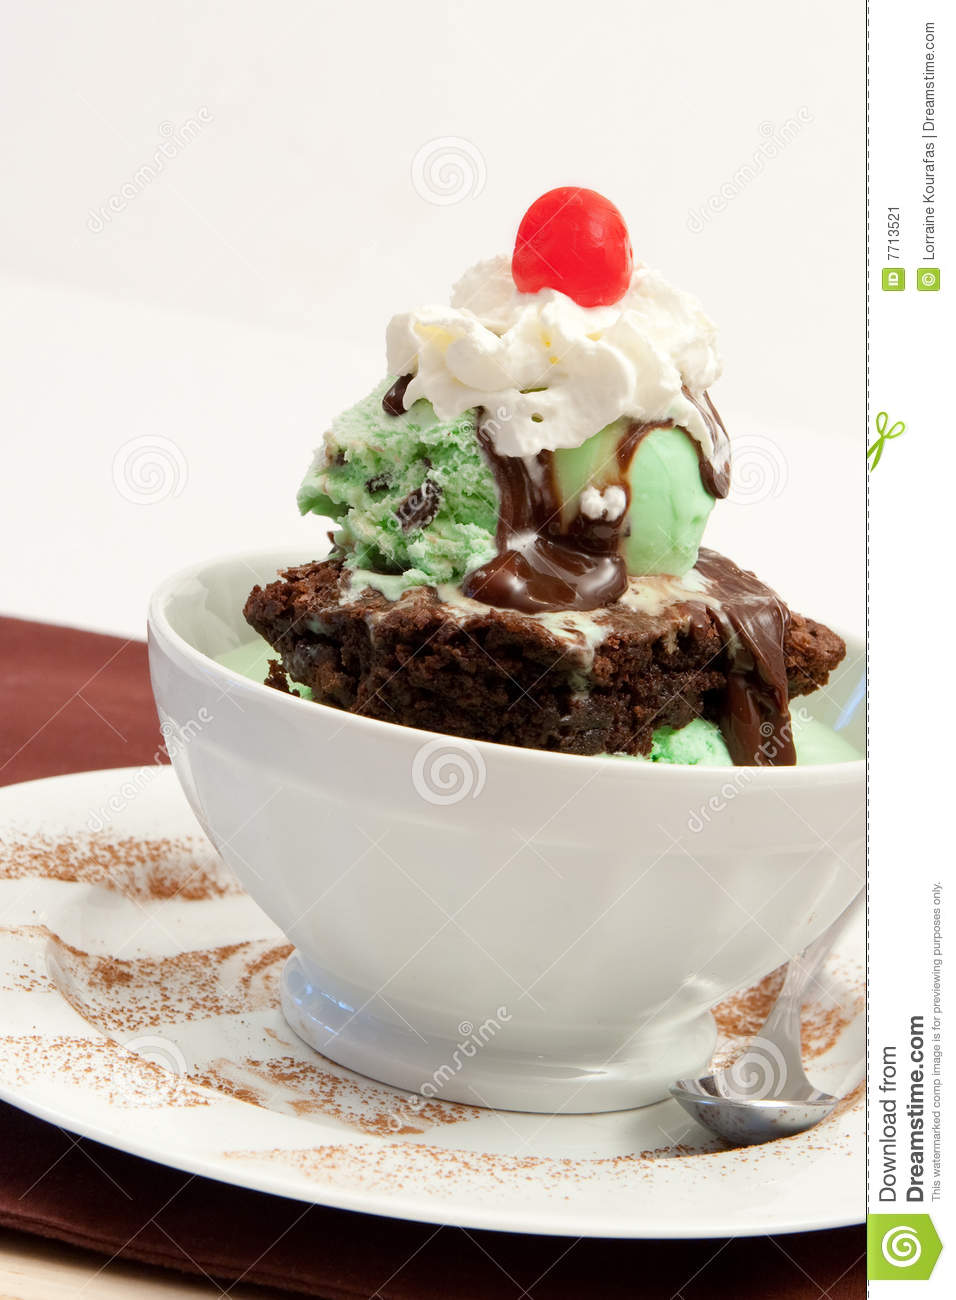 Ice Cream Brownie Sundae Stock Image   Image  7713521